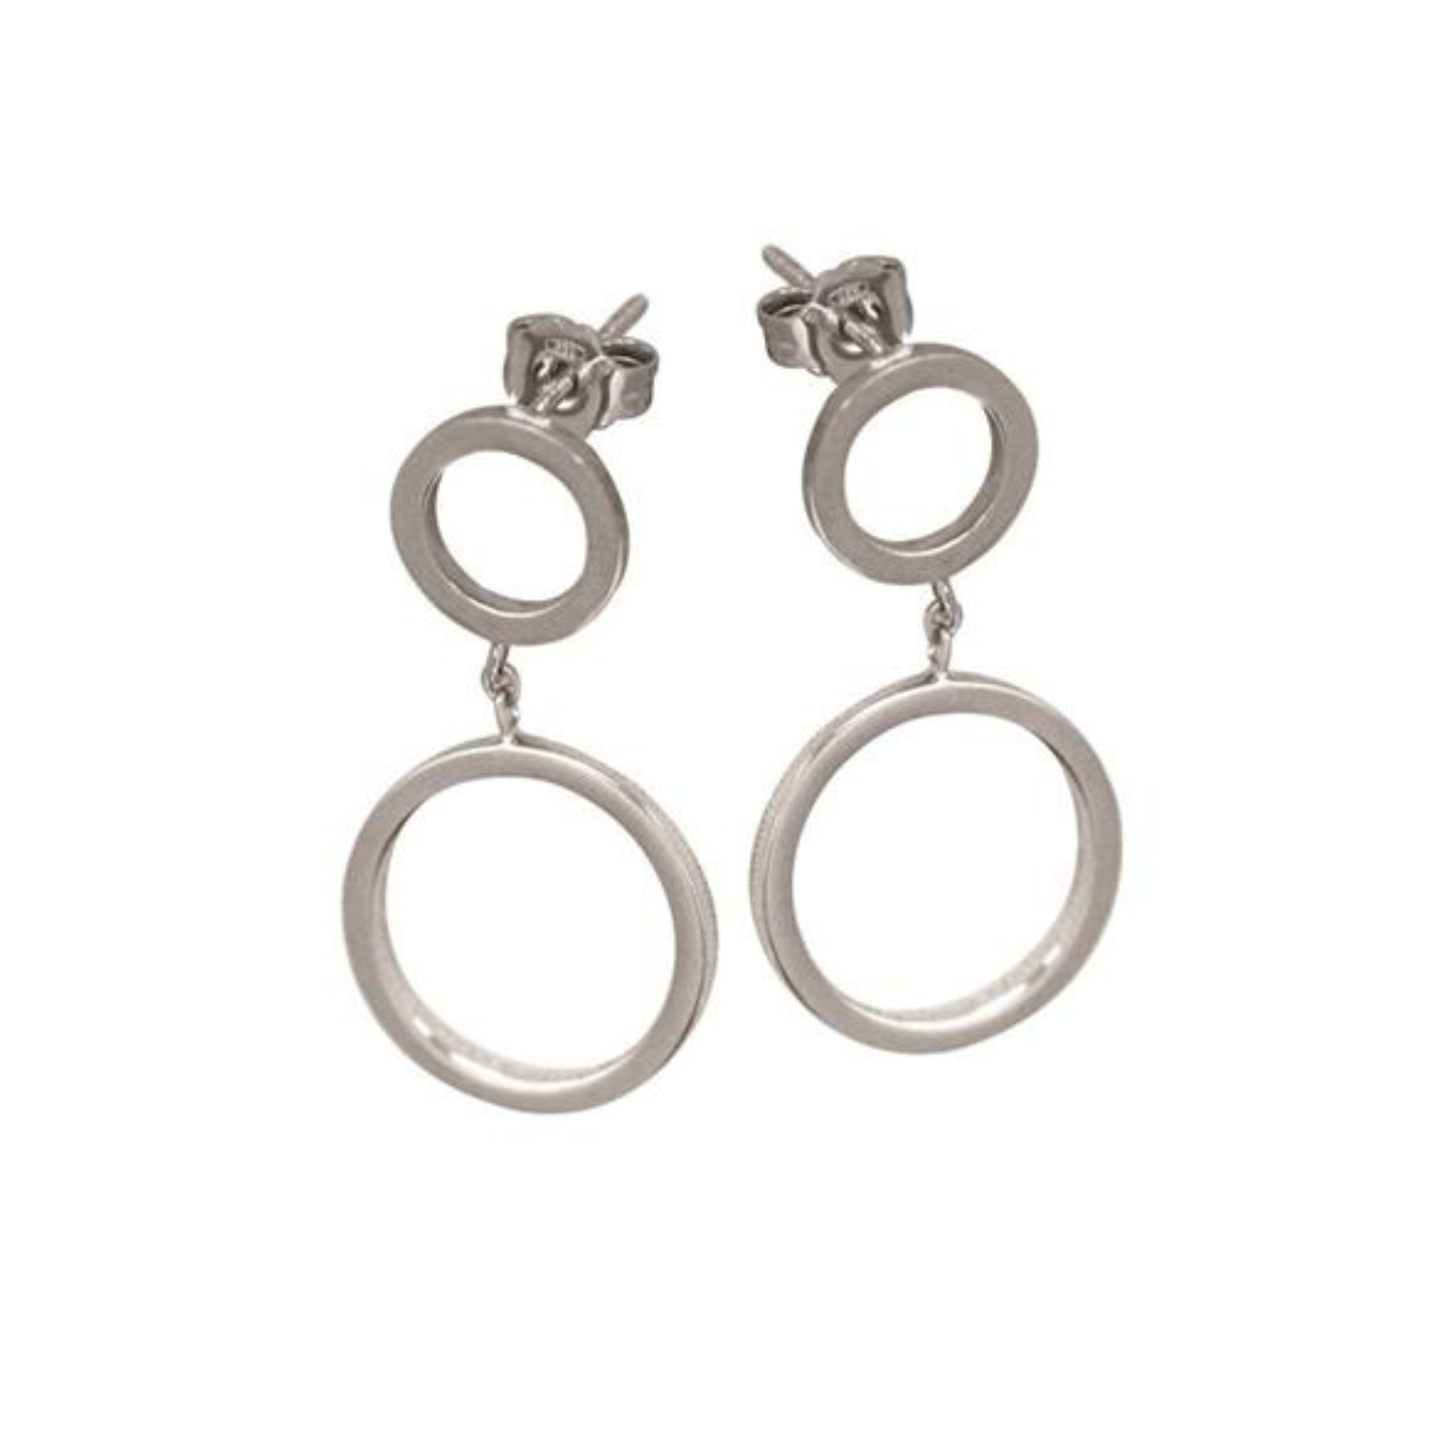 Sterling Silver Double Circle Drop Earrings